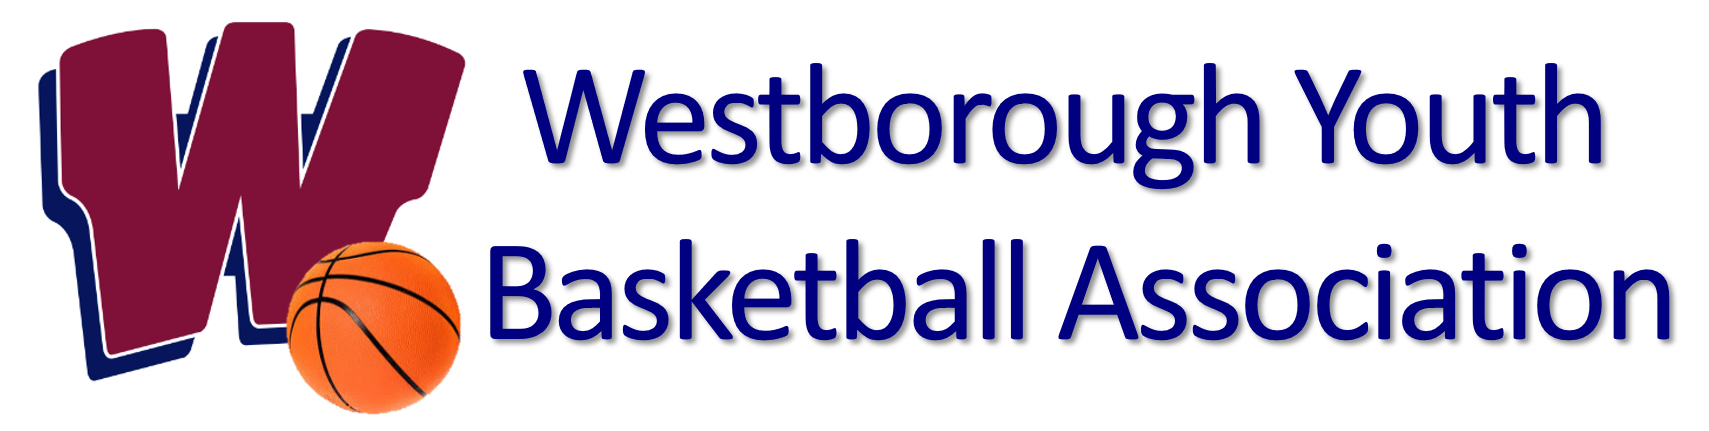 Westborough Youth Basketball Association